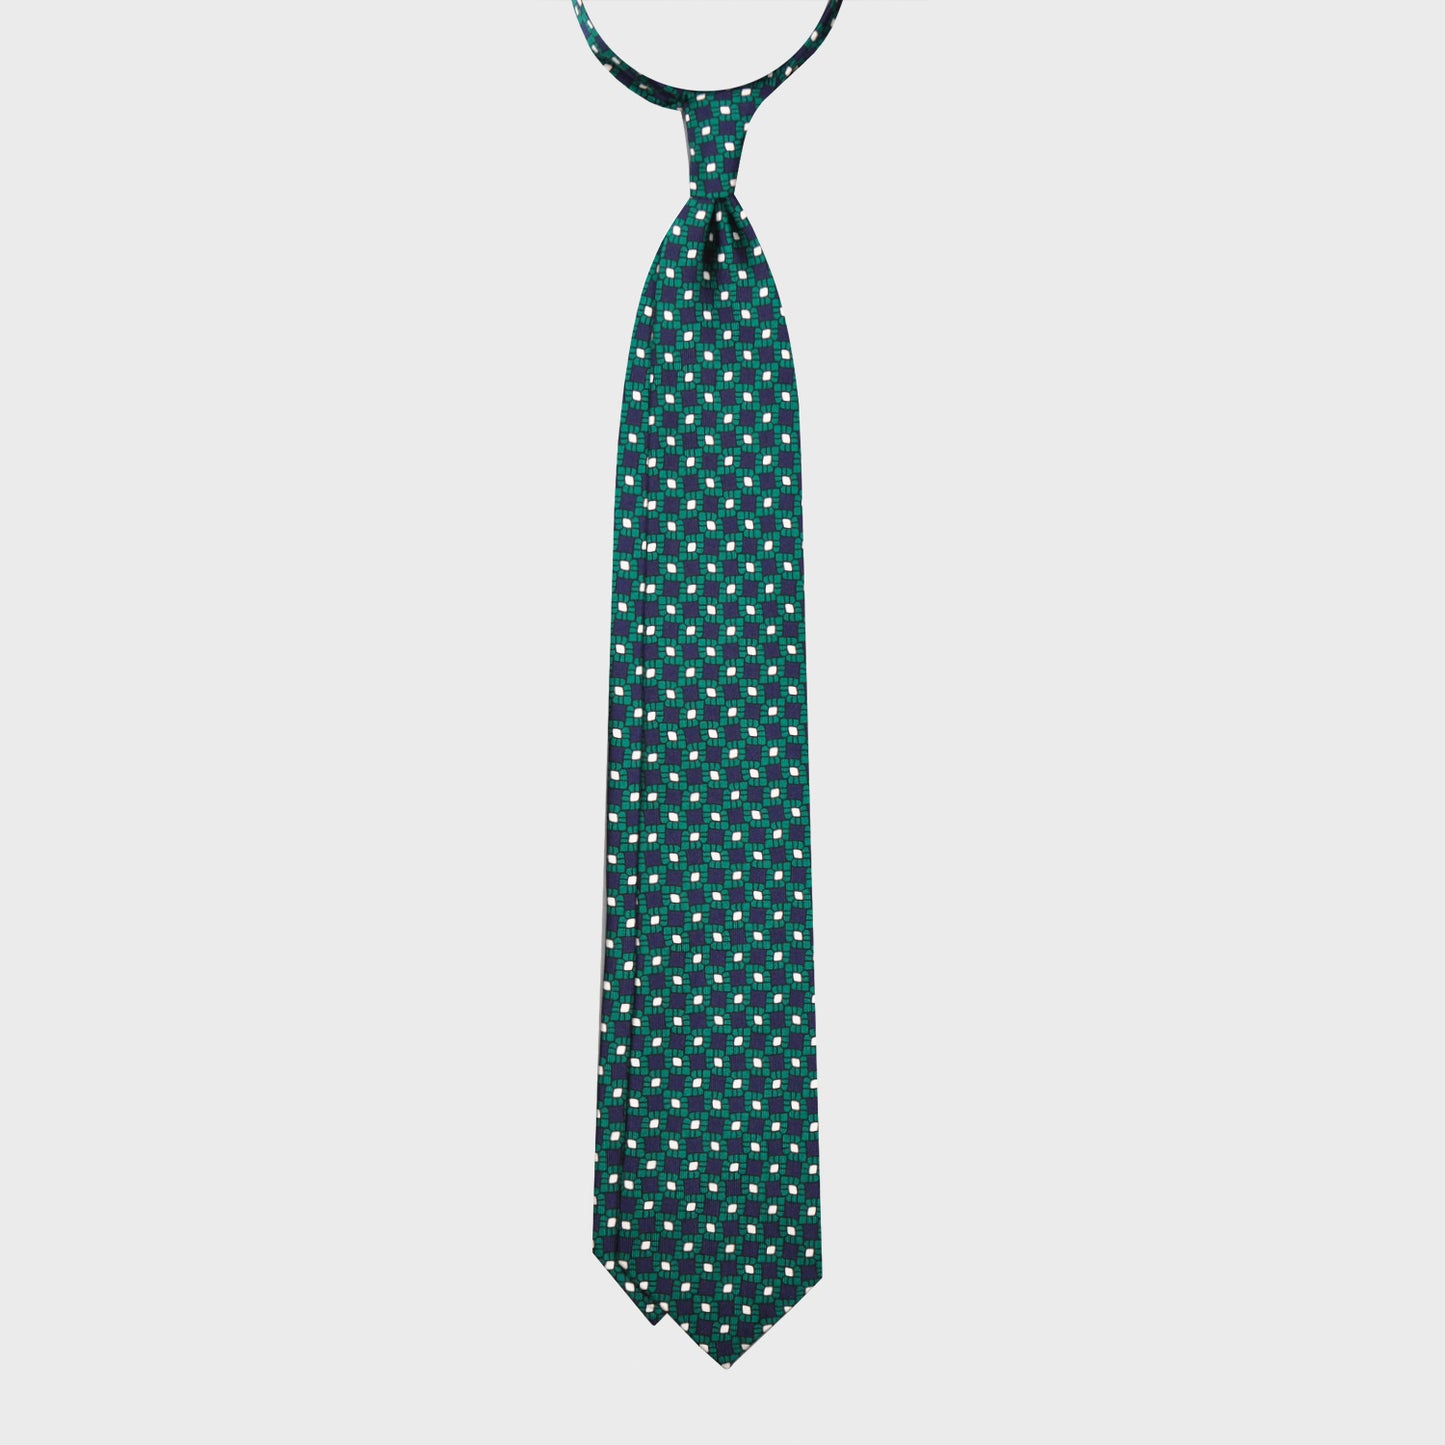 F.Marino Silk Tie 3 Folds Vintage Diamonds Emerald Green-Wools Boutique Uomo